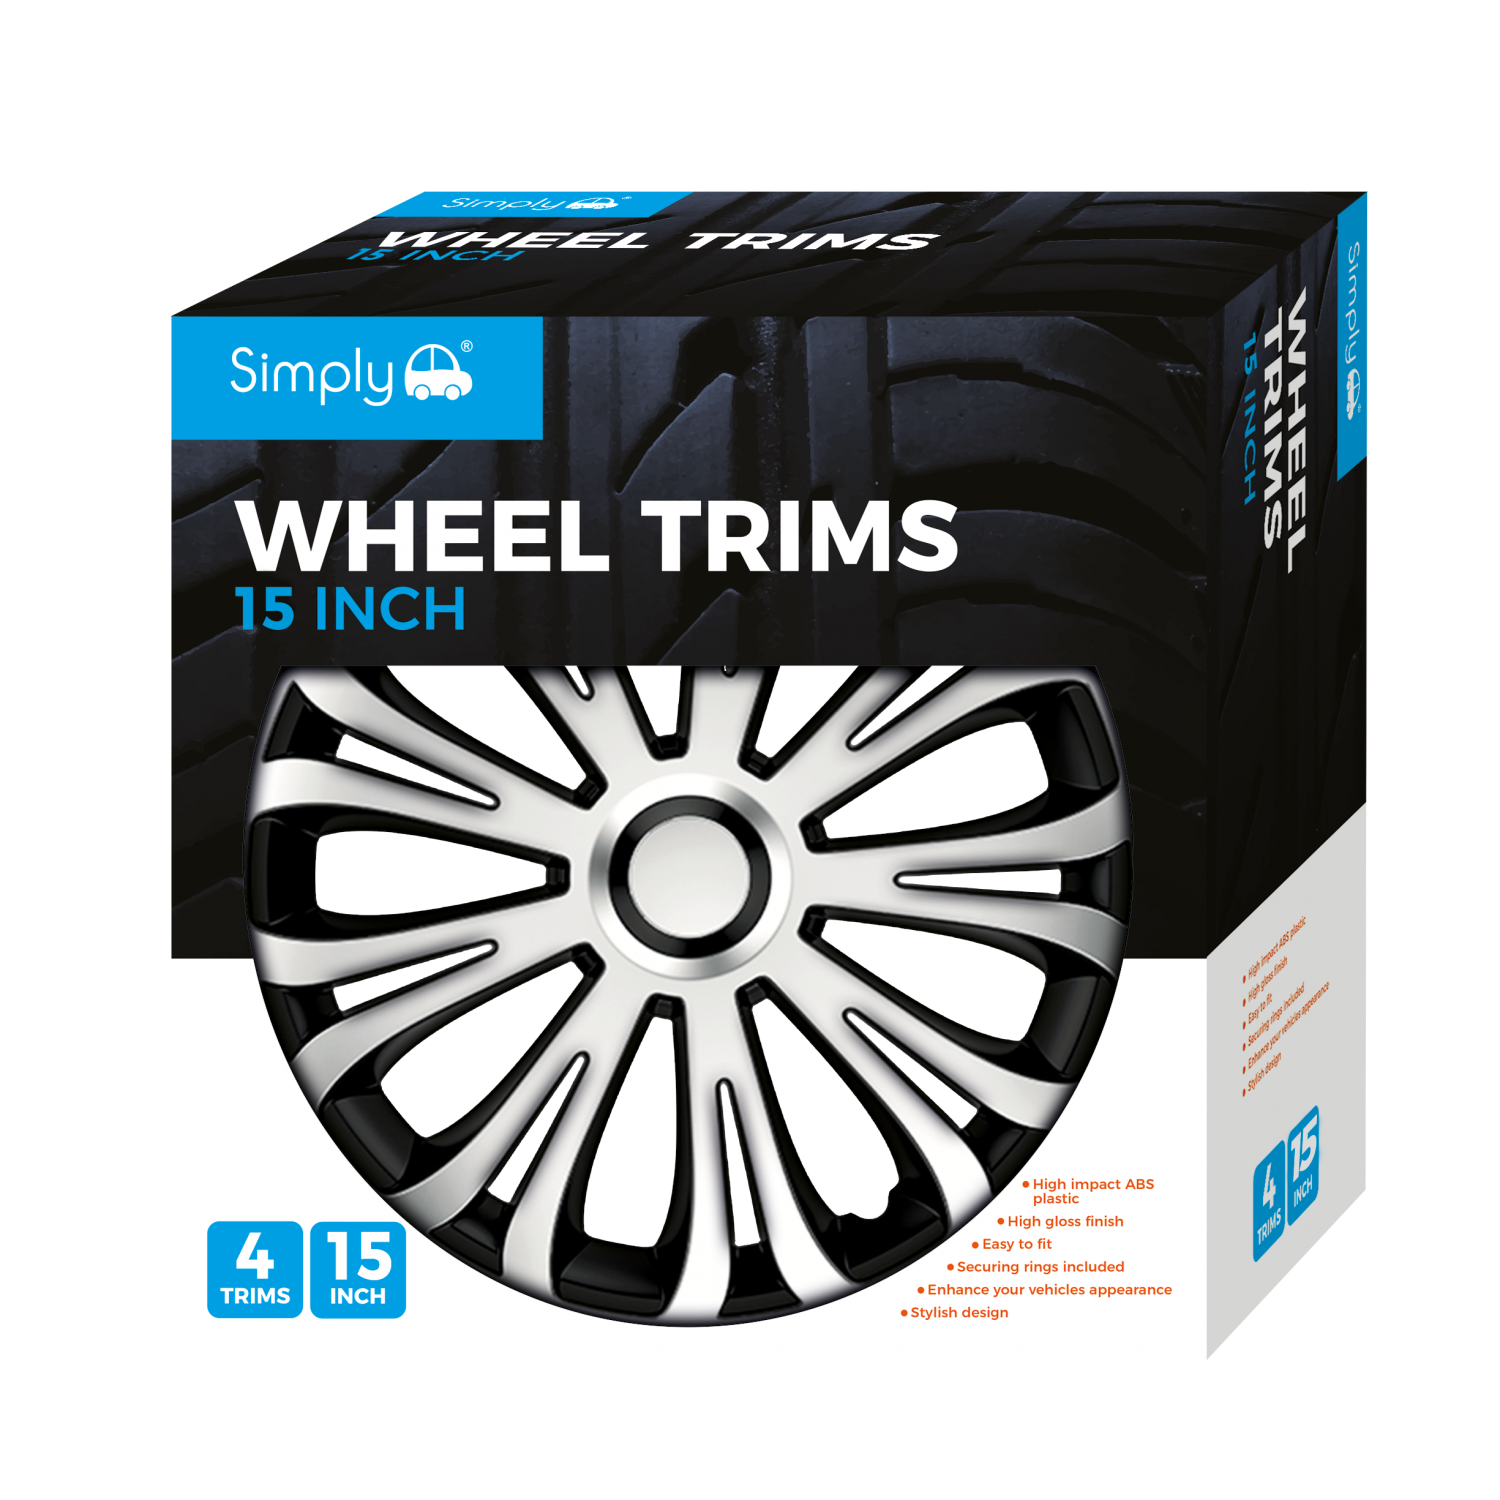 Simply Auto Wheel Trims 15inch - Thrust Image 1